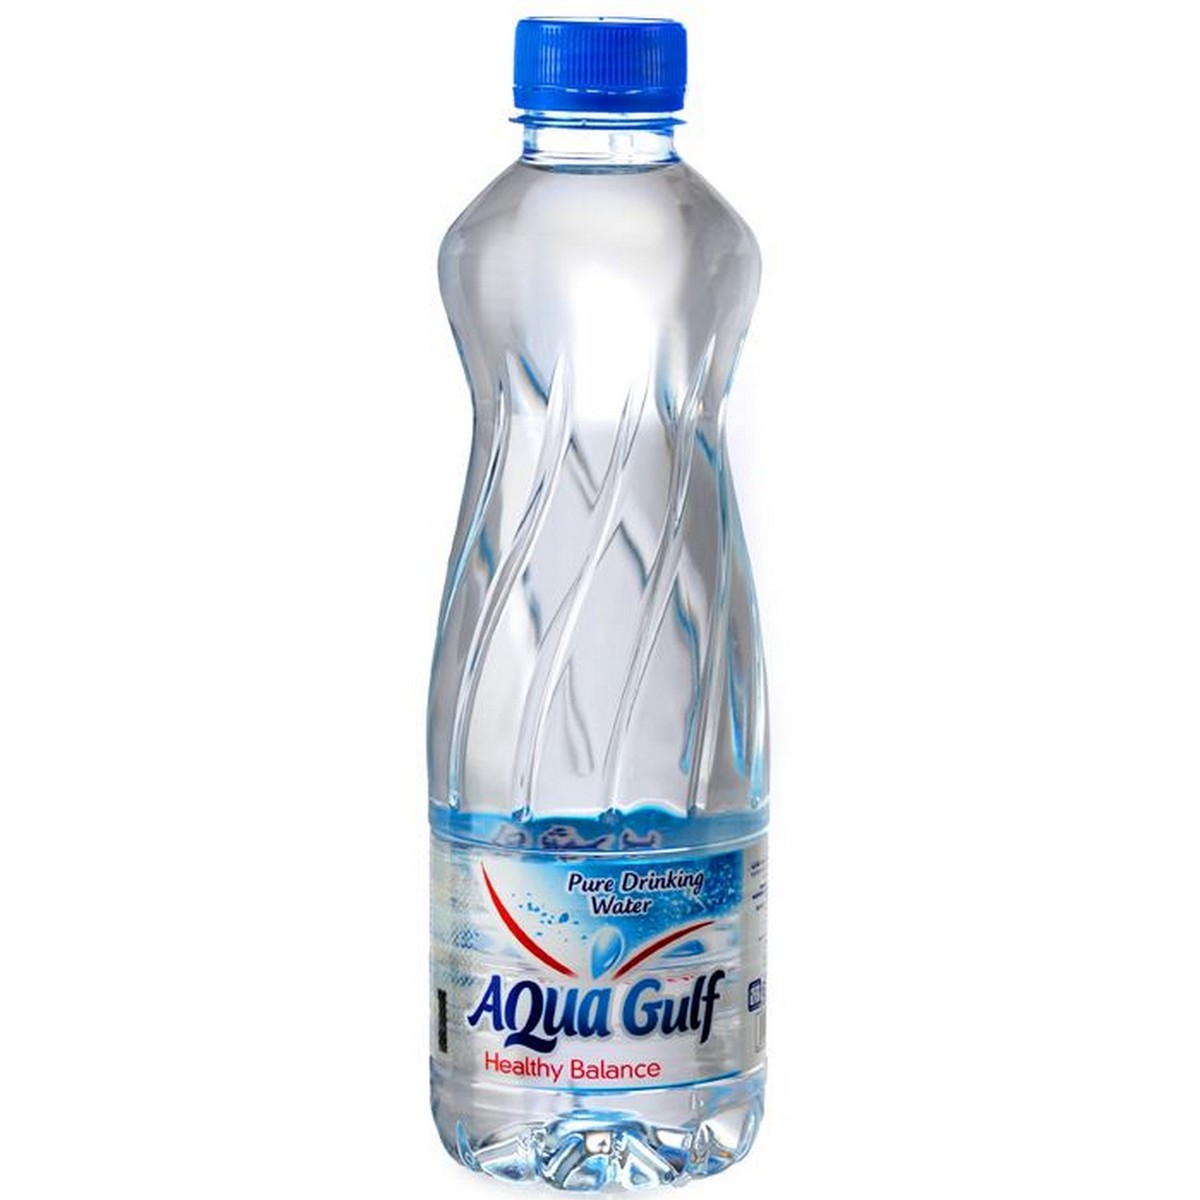 Aqua Gulf Drinking Water 500ml x 12 Pieces